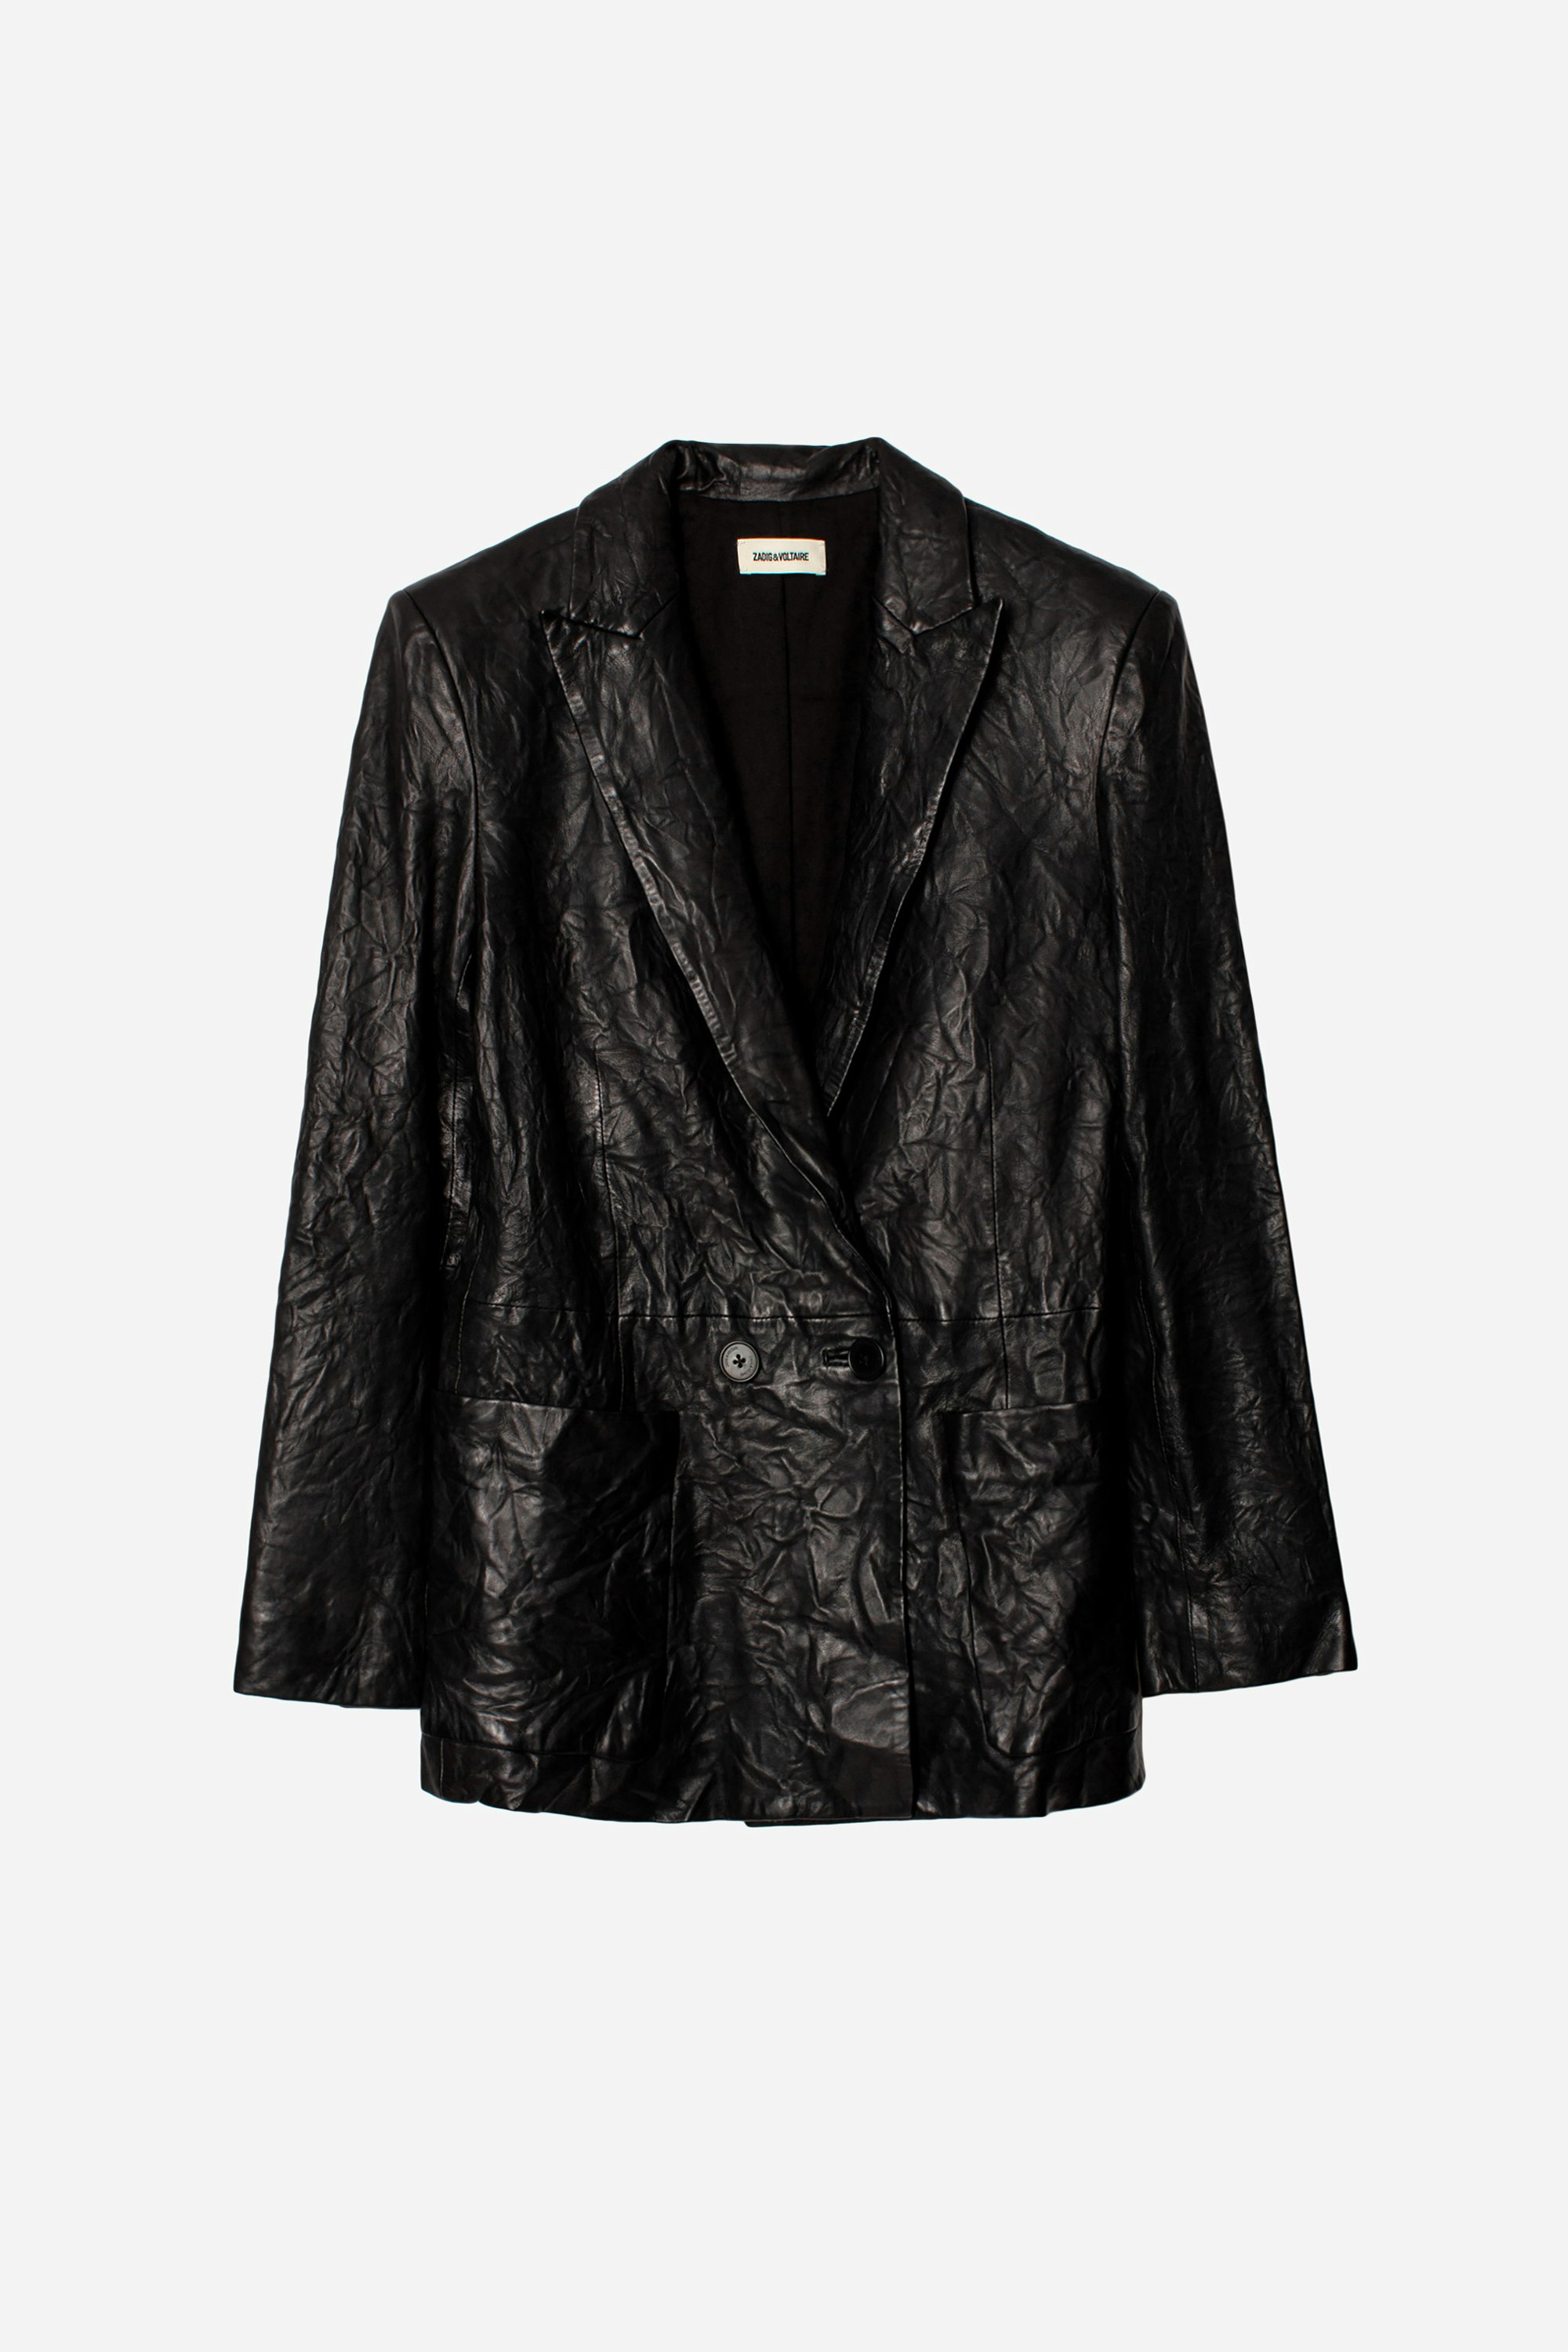 Visco Crinkle Leather Jacket Women’s black tailored jacket in crinkle-effect leather.